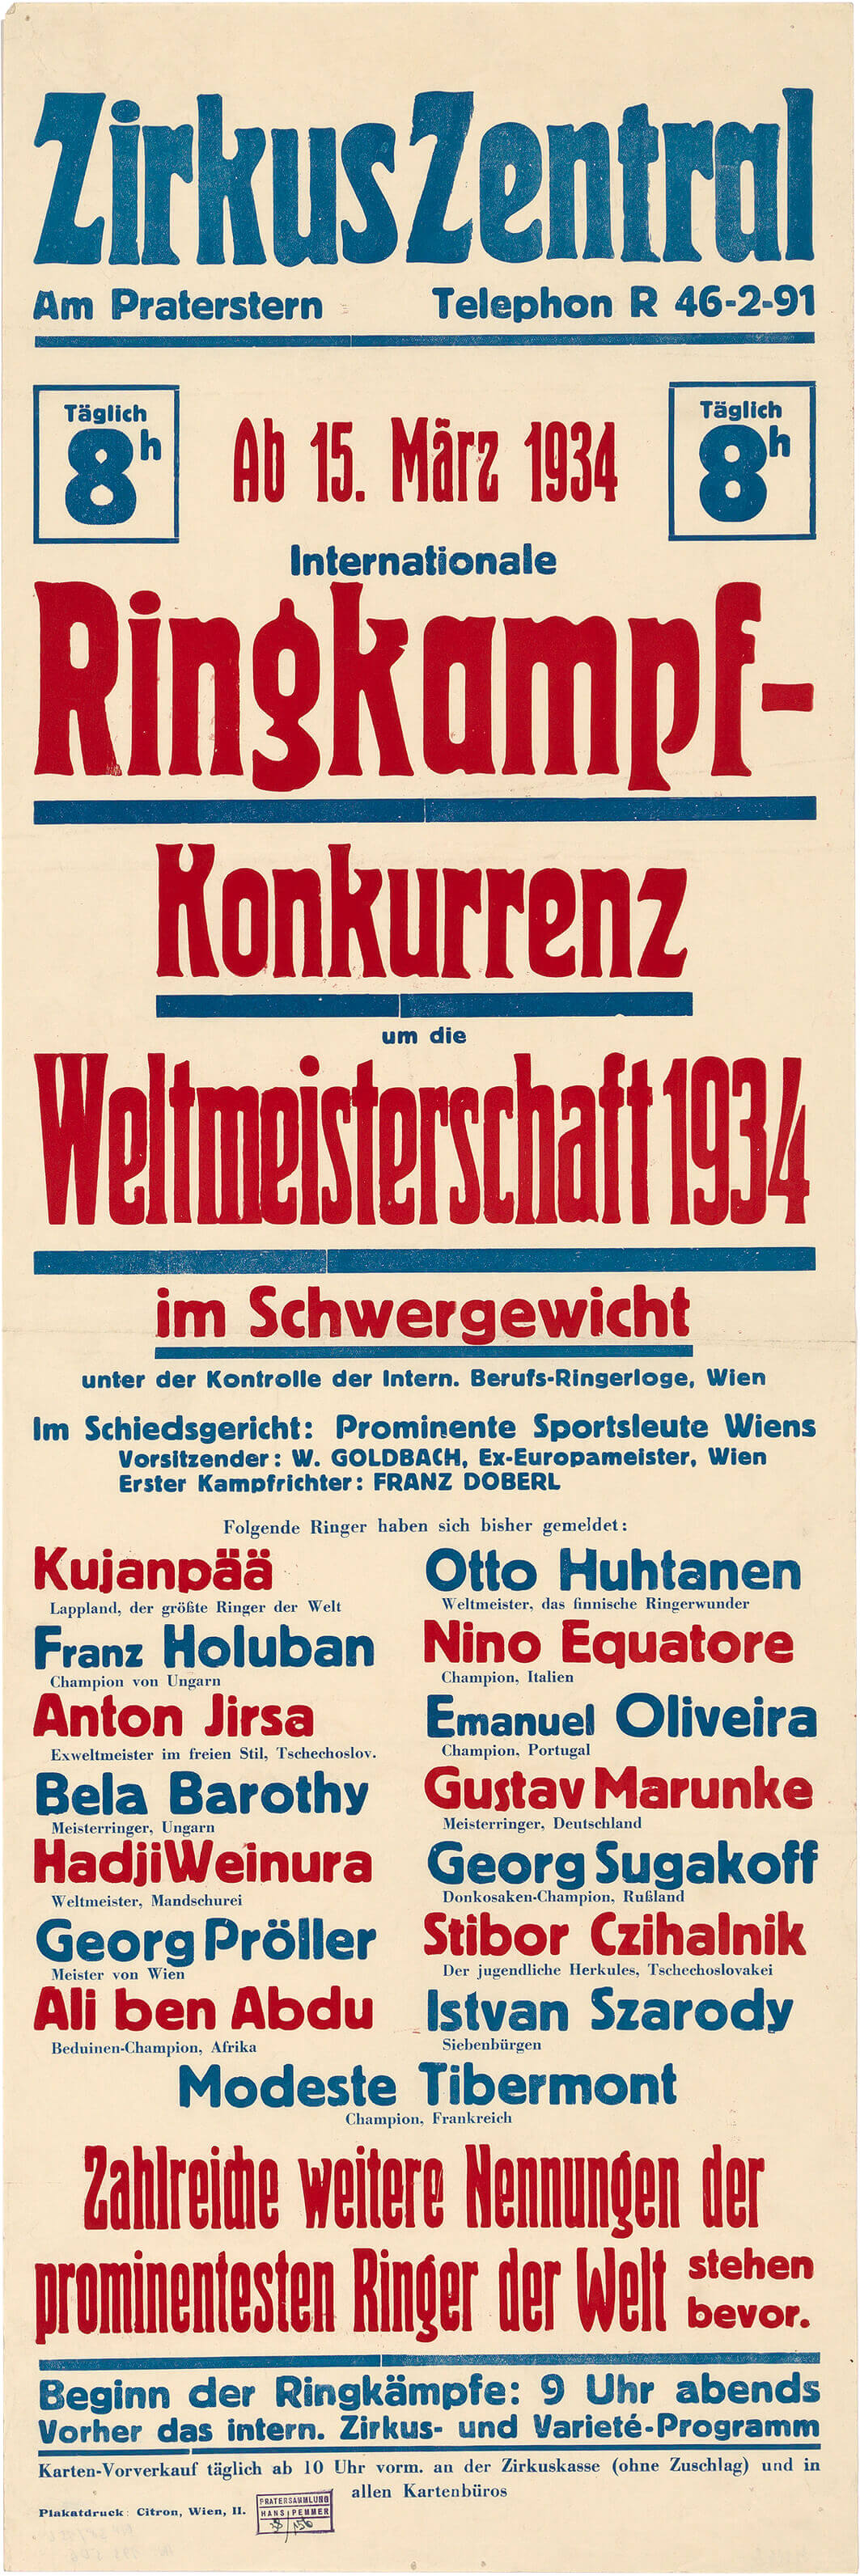 Plakat Ringkampf-Weltmeisterschaft mit dem „Beduinen-Champion“ Ali ben Abdu aus Afrika, 1934, Wien Museum 